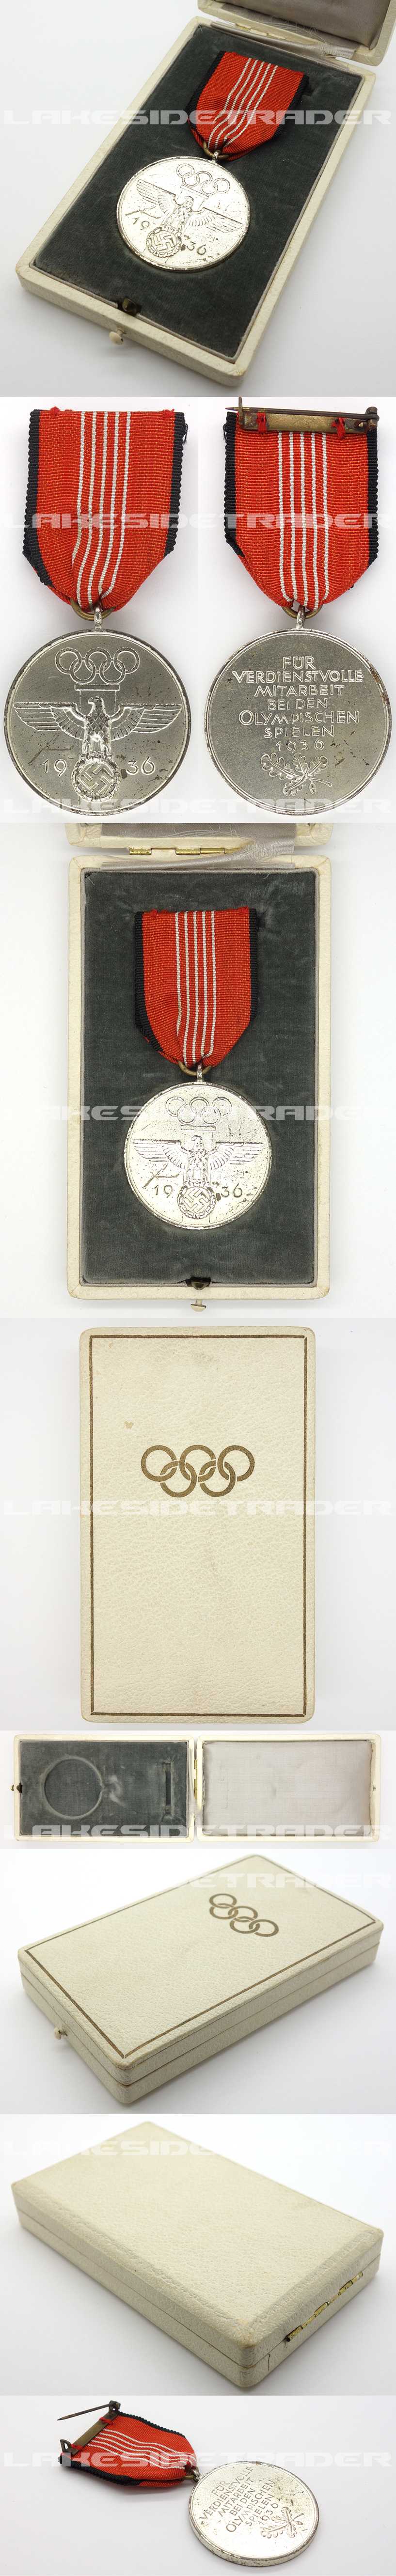 Cased Olympic Memorial Medal 1936